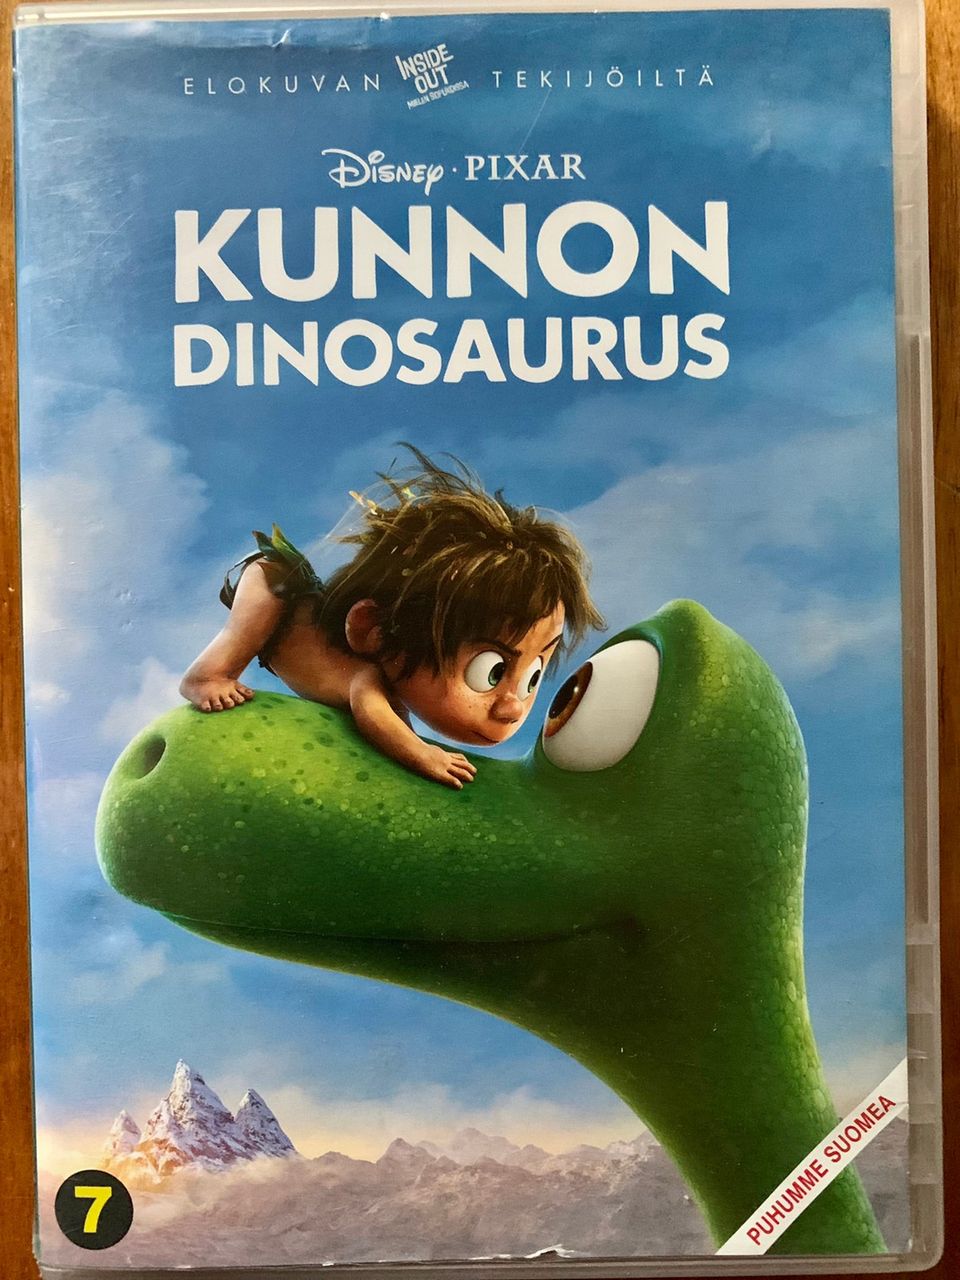 Kunnon dinosaurus - Disney Pixar Klassikko 16 DVD